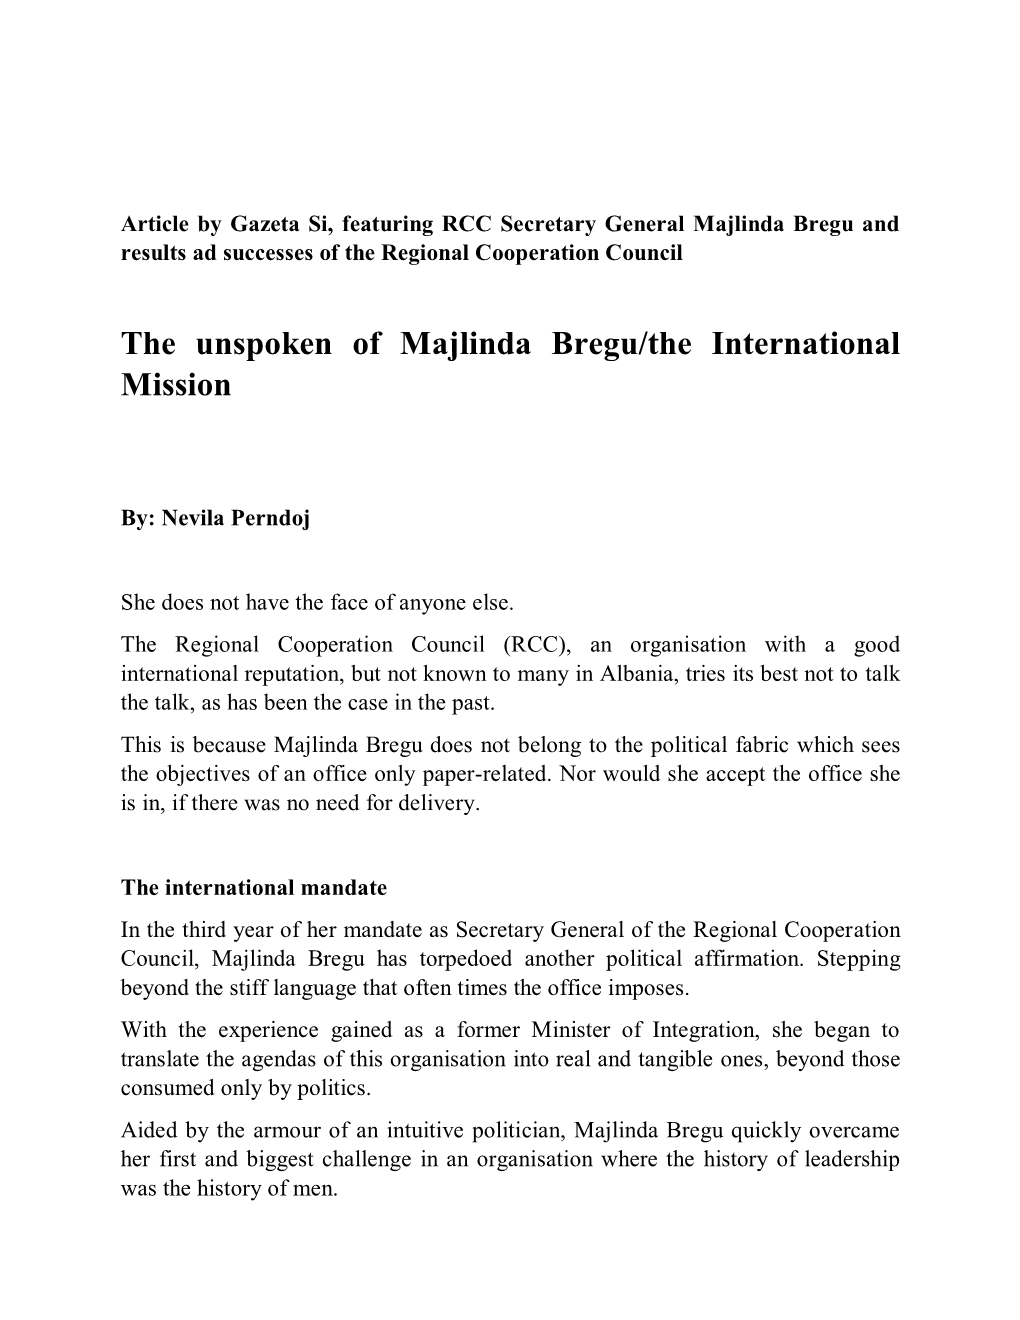 The Unspoken of Majlinda Bregu/The International Mission